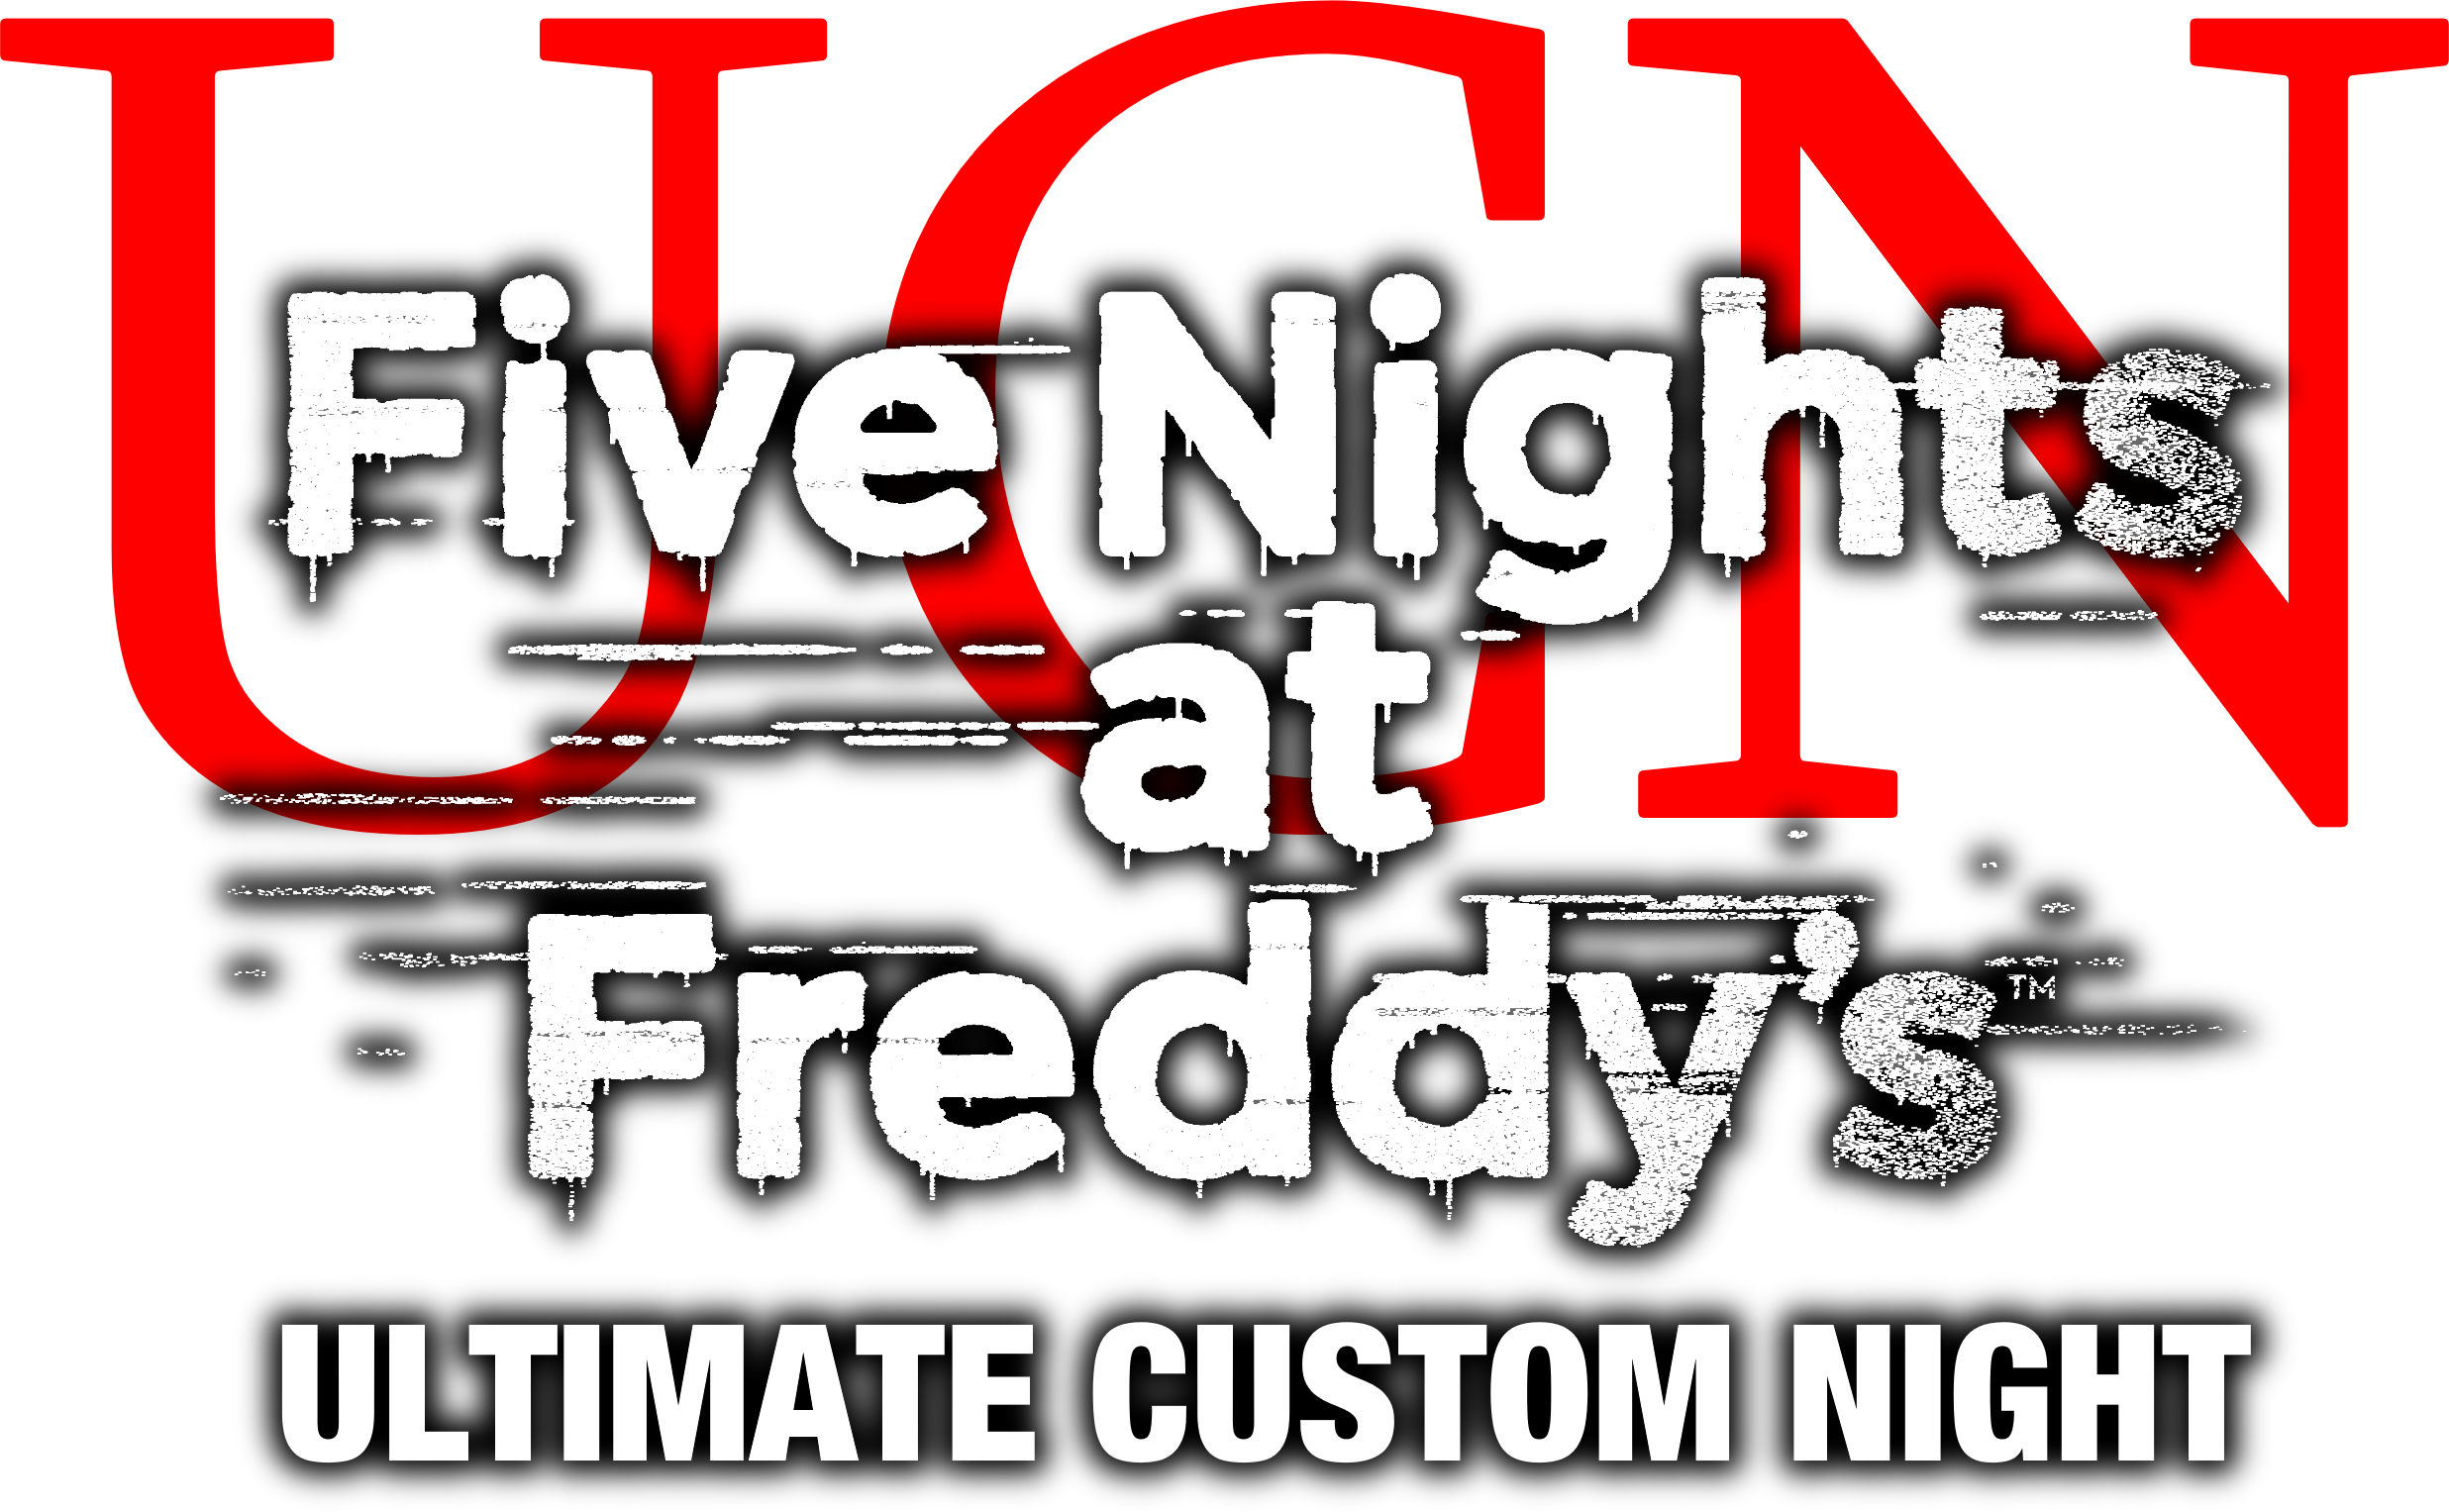 Ultimate Custom Night, UCN